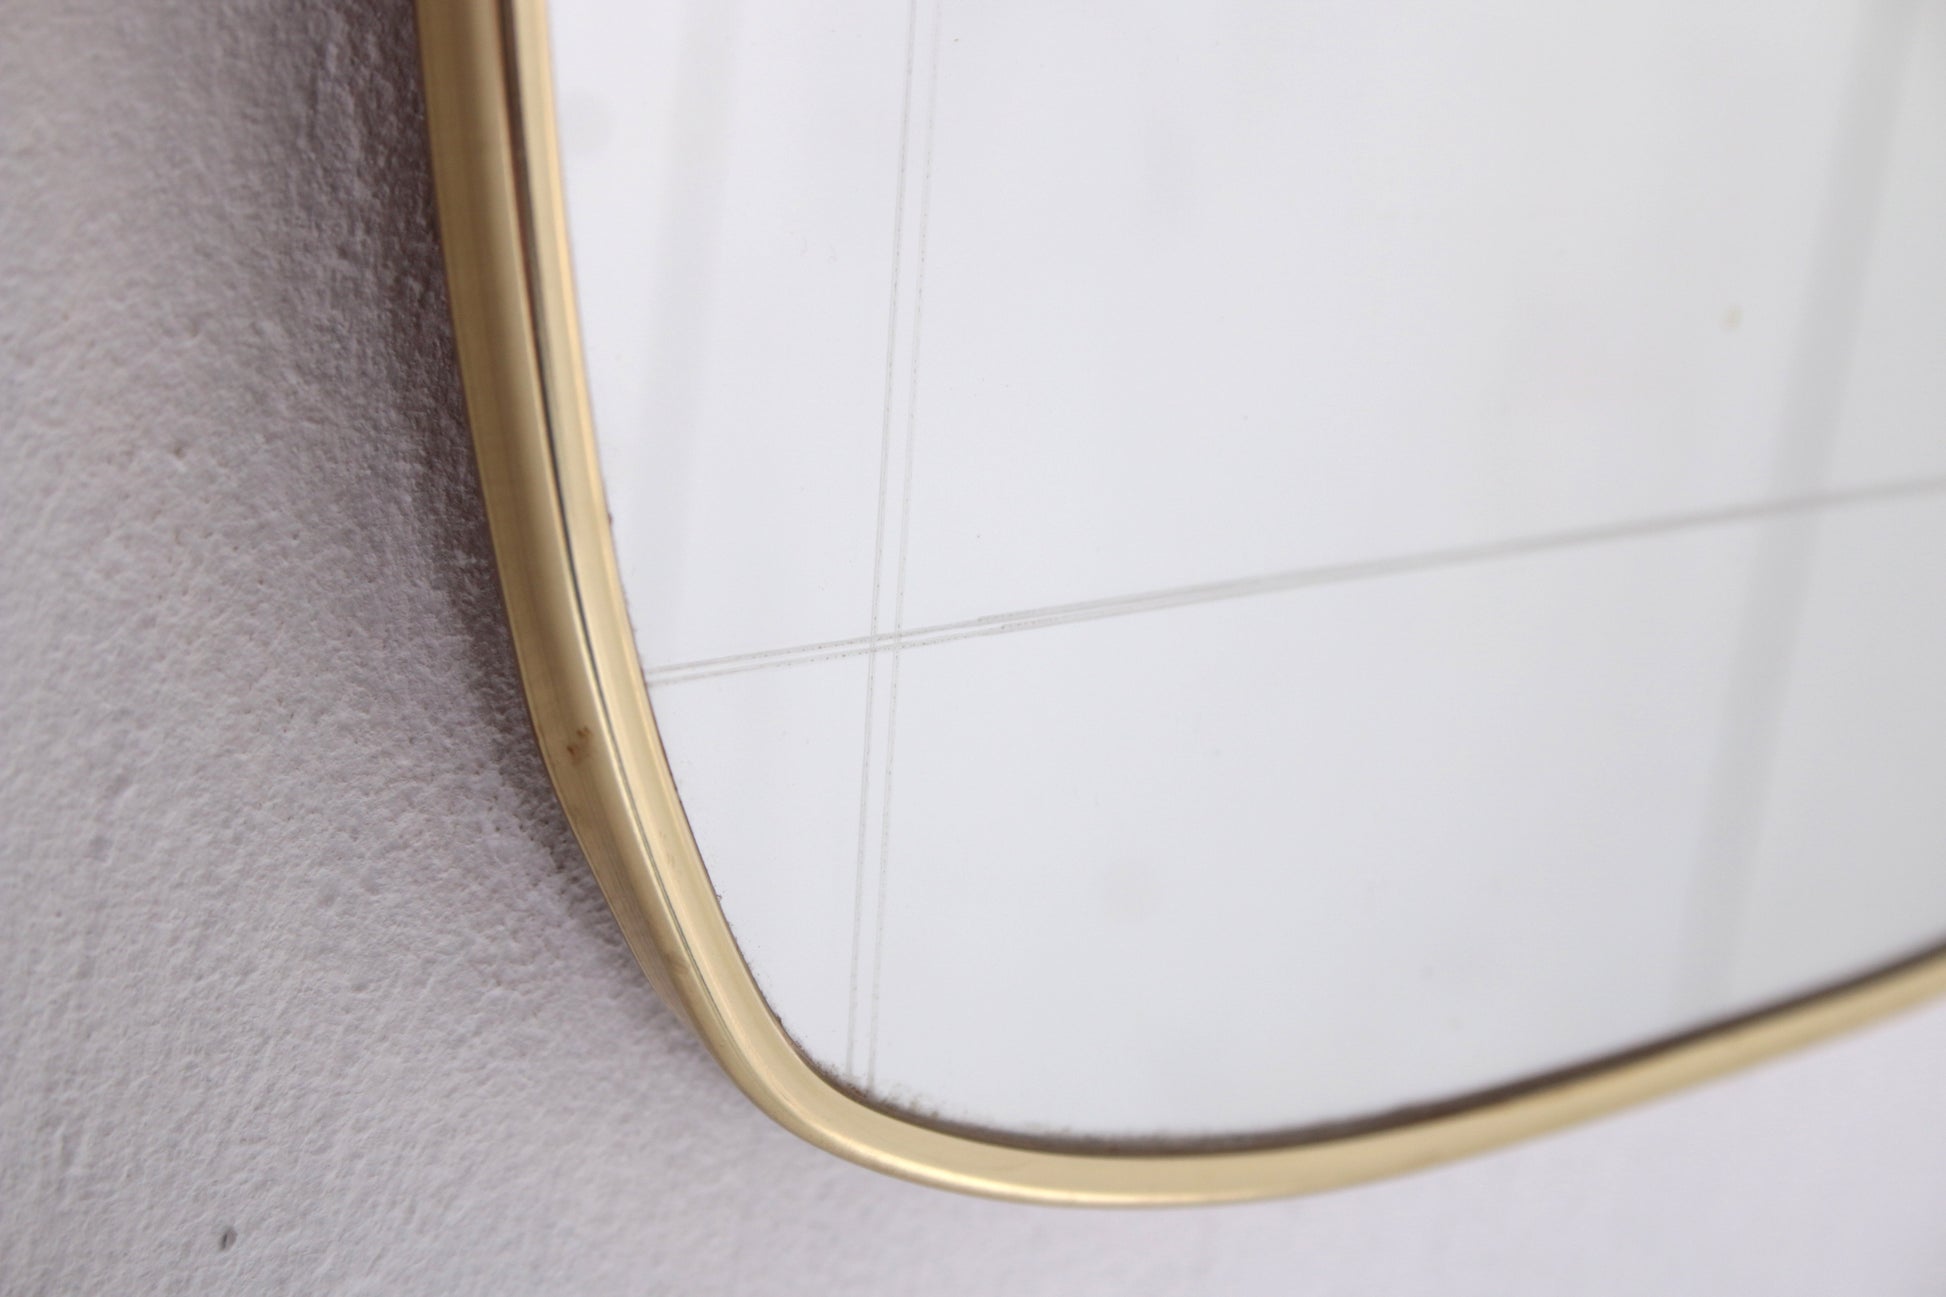 Vintage messing spiegel | Retro spiegel met goud jaren 60 detail onderkant